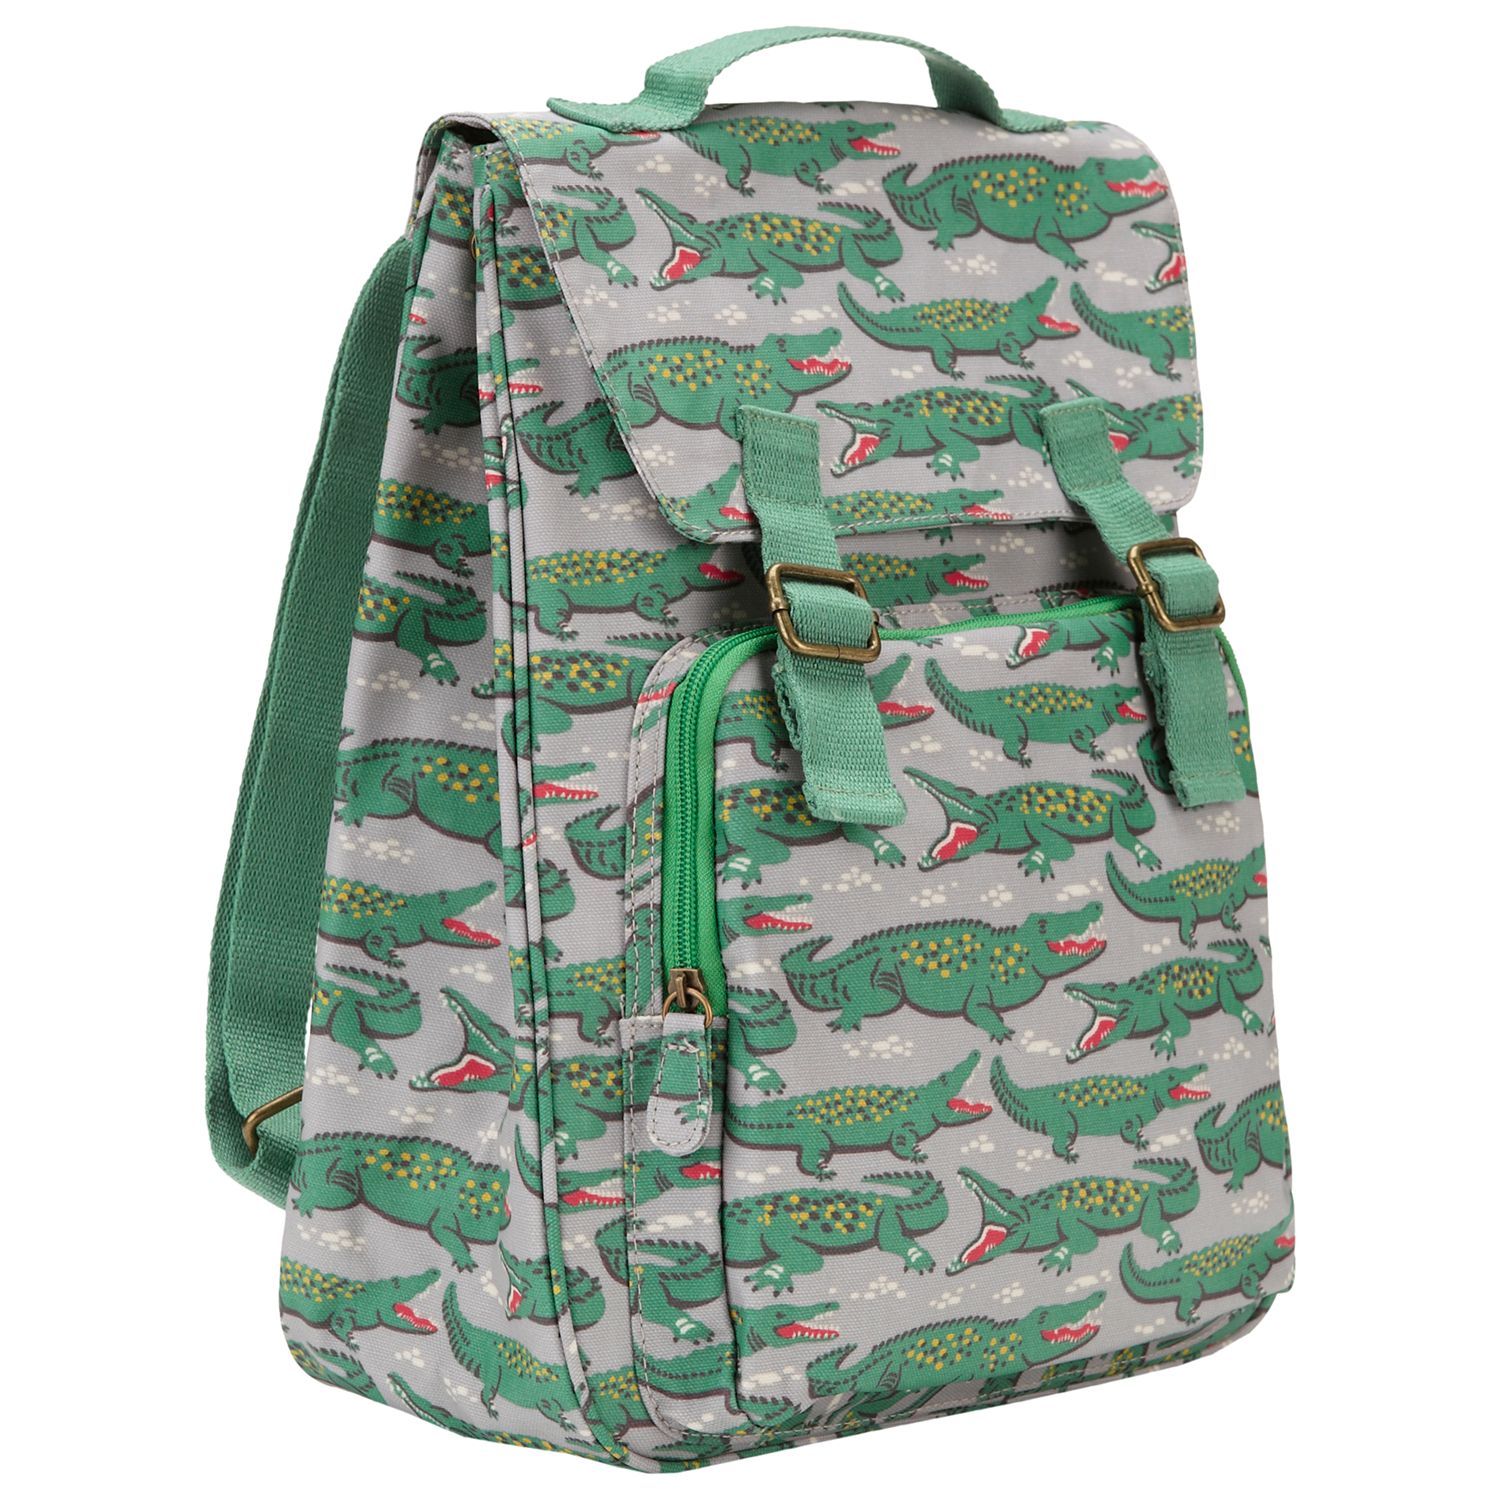 Cath Kidston Crocodile Backpack, Grey 